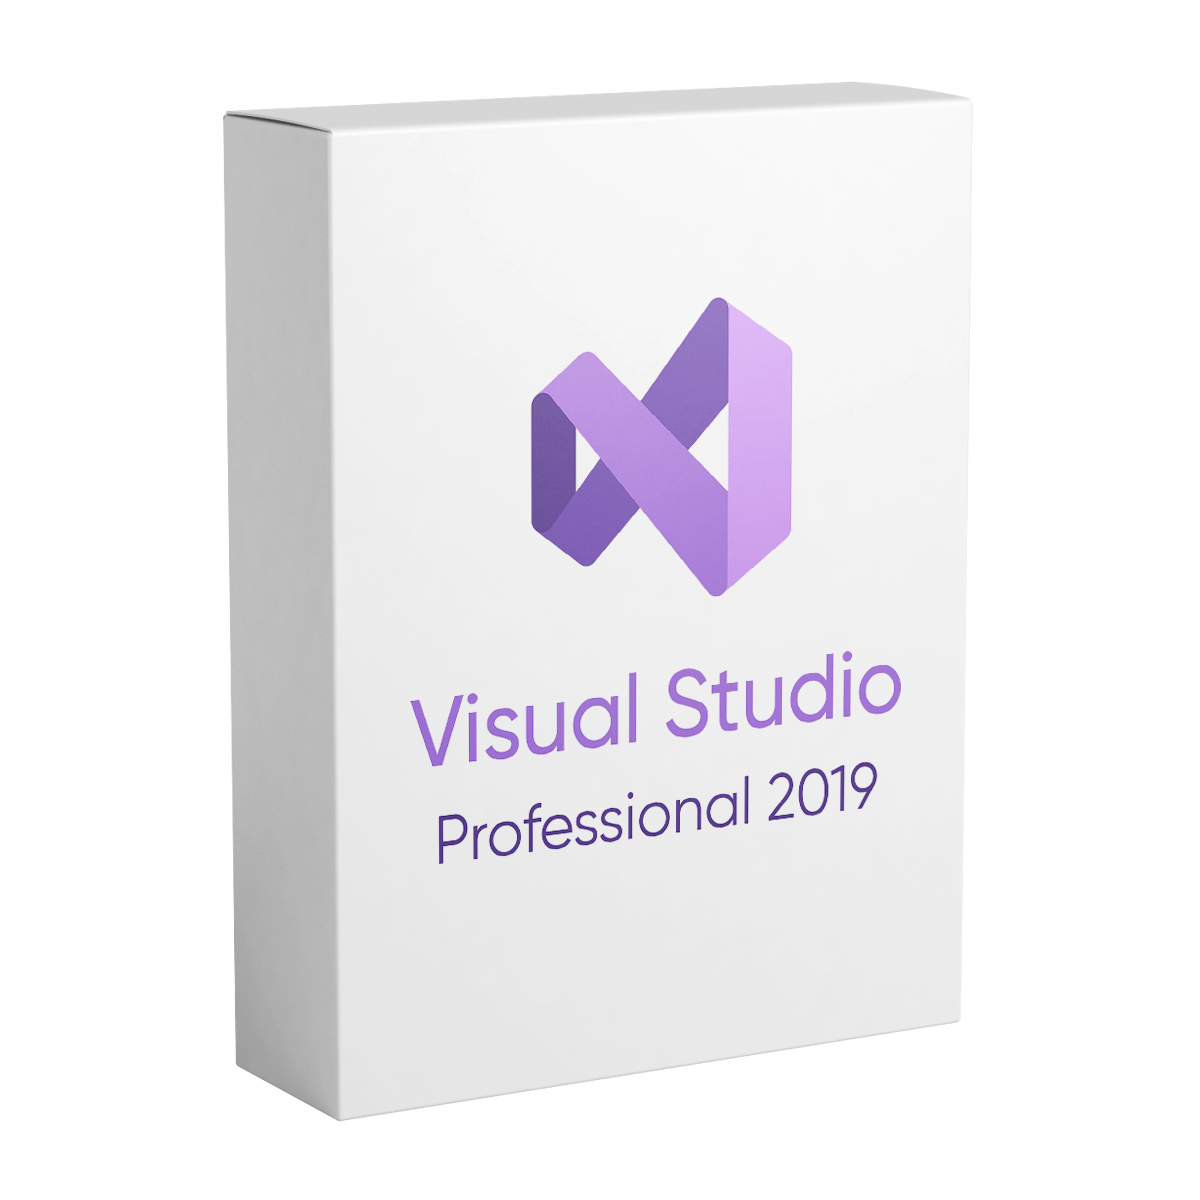 Visual Studio Professional 2019 - Lifetime License for 1 PC